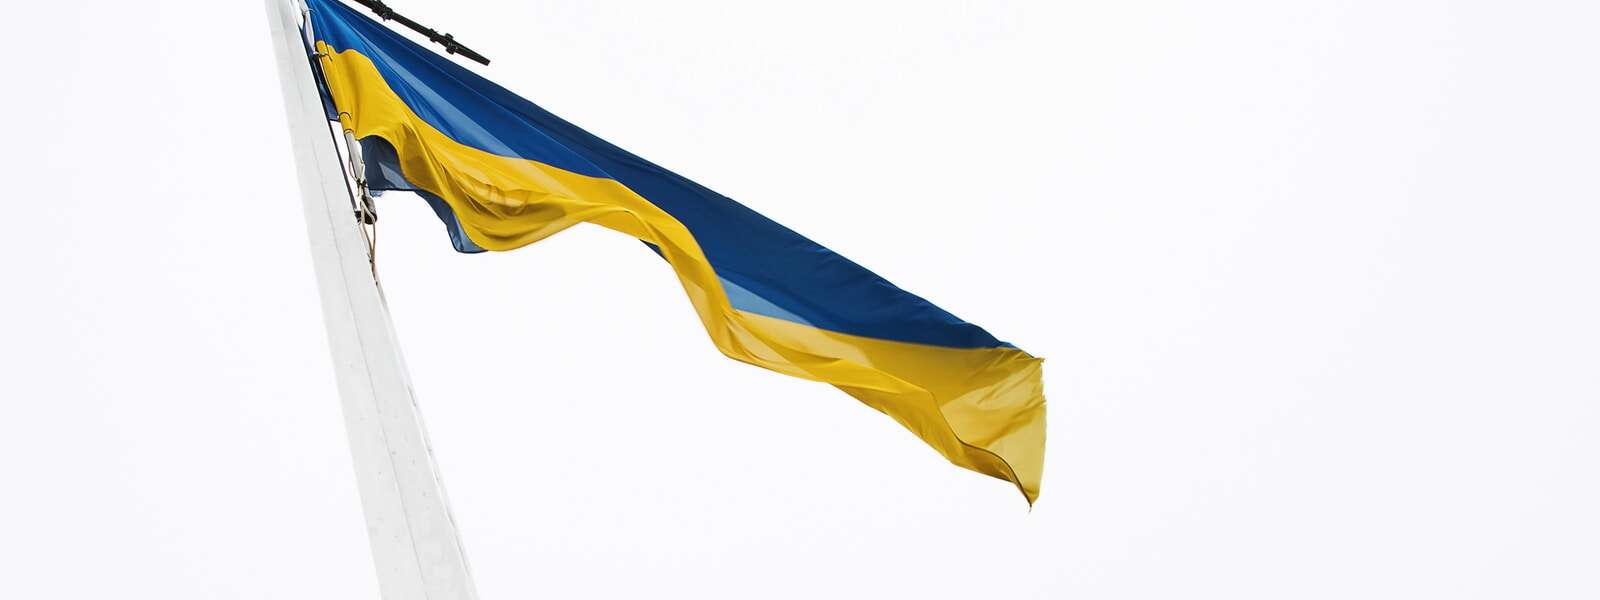 The Ukrainian flag (top half blue, bottom half yellow) flies against a white overcast sky.